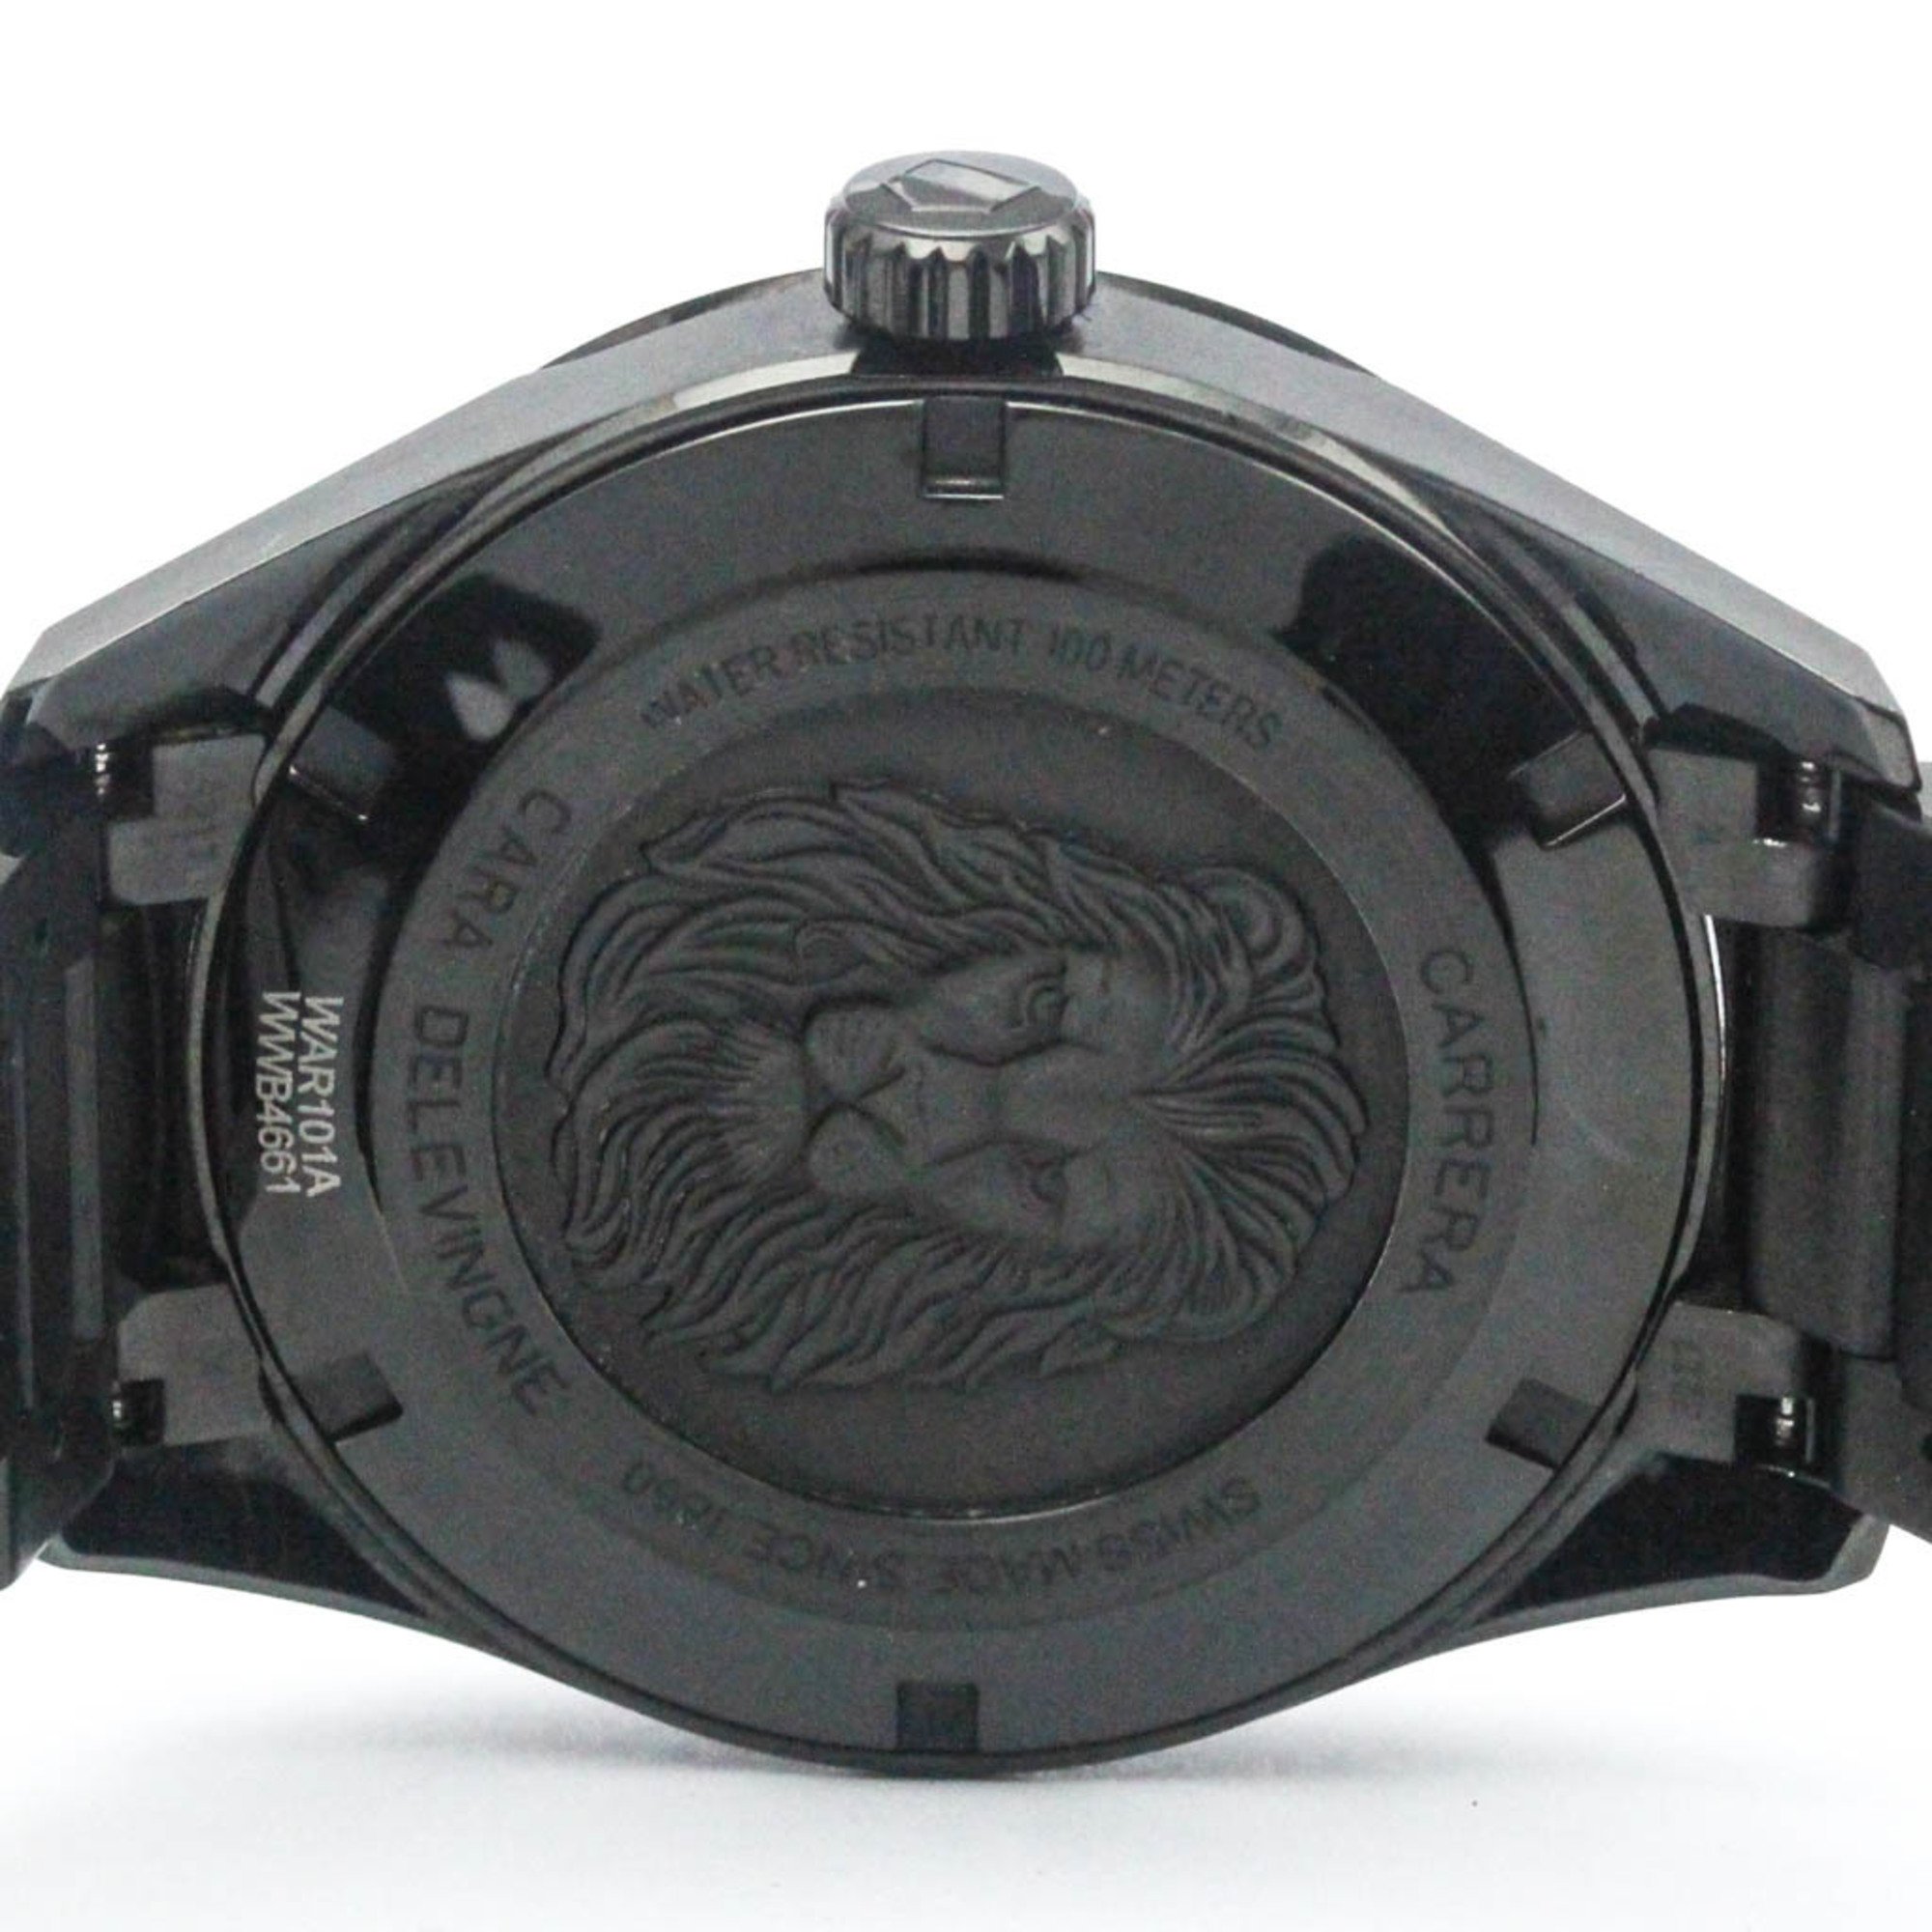 TAG HEUER Carrera Cara Delevingne LTD Edition Steel Watch WAR101A BF568956